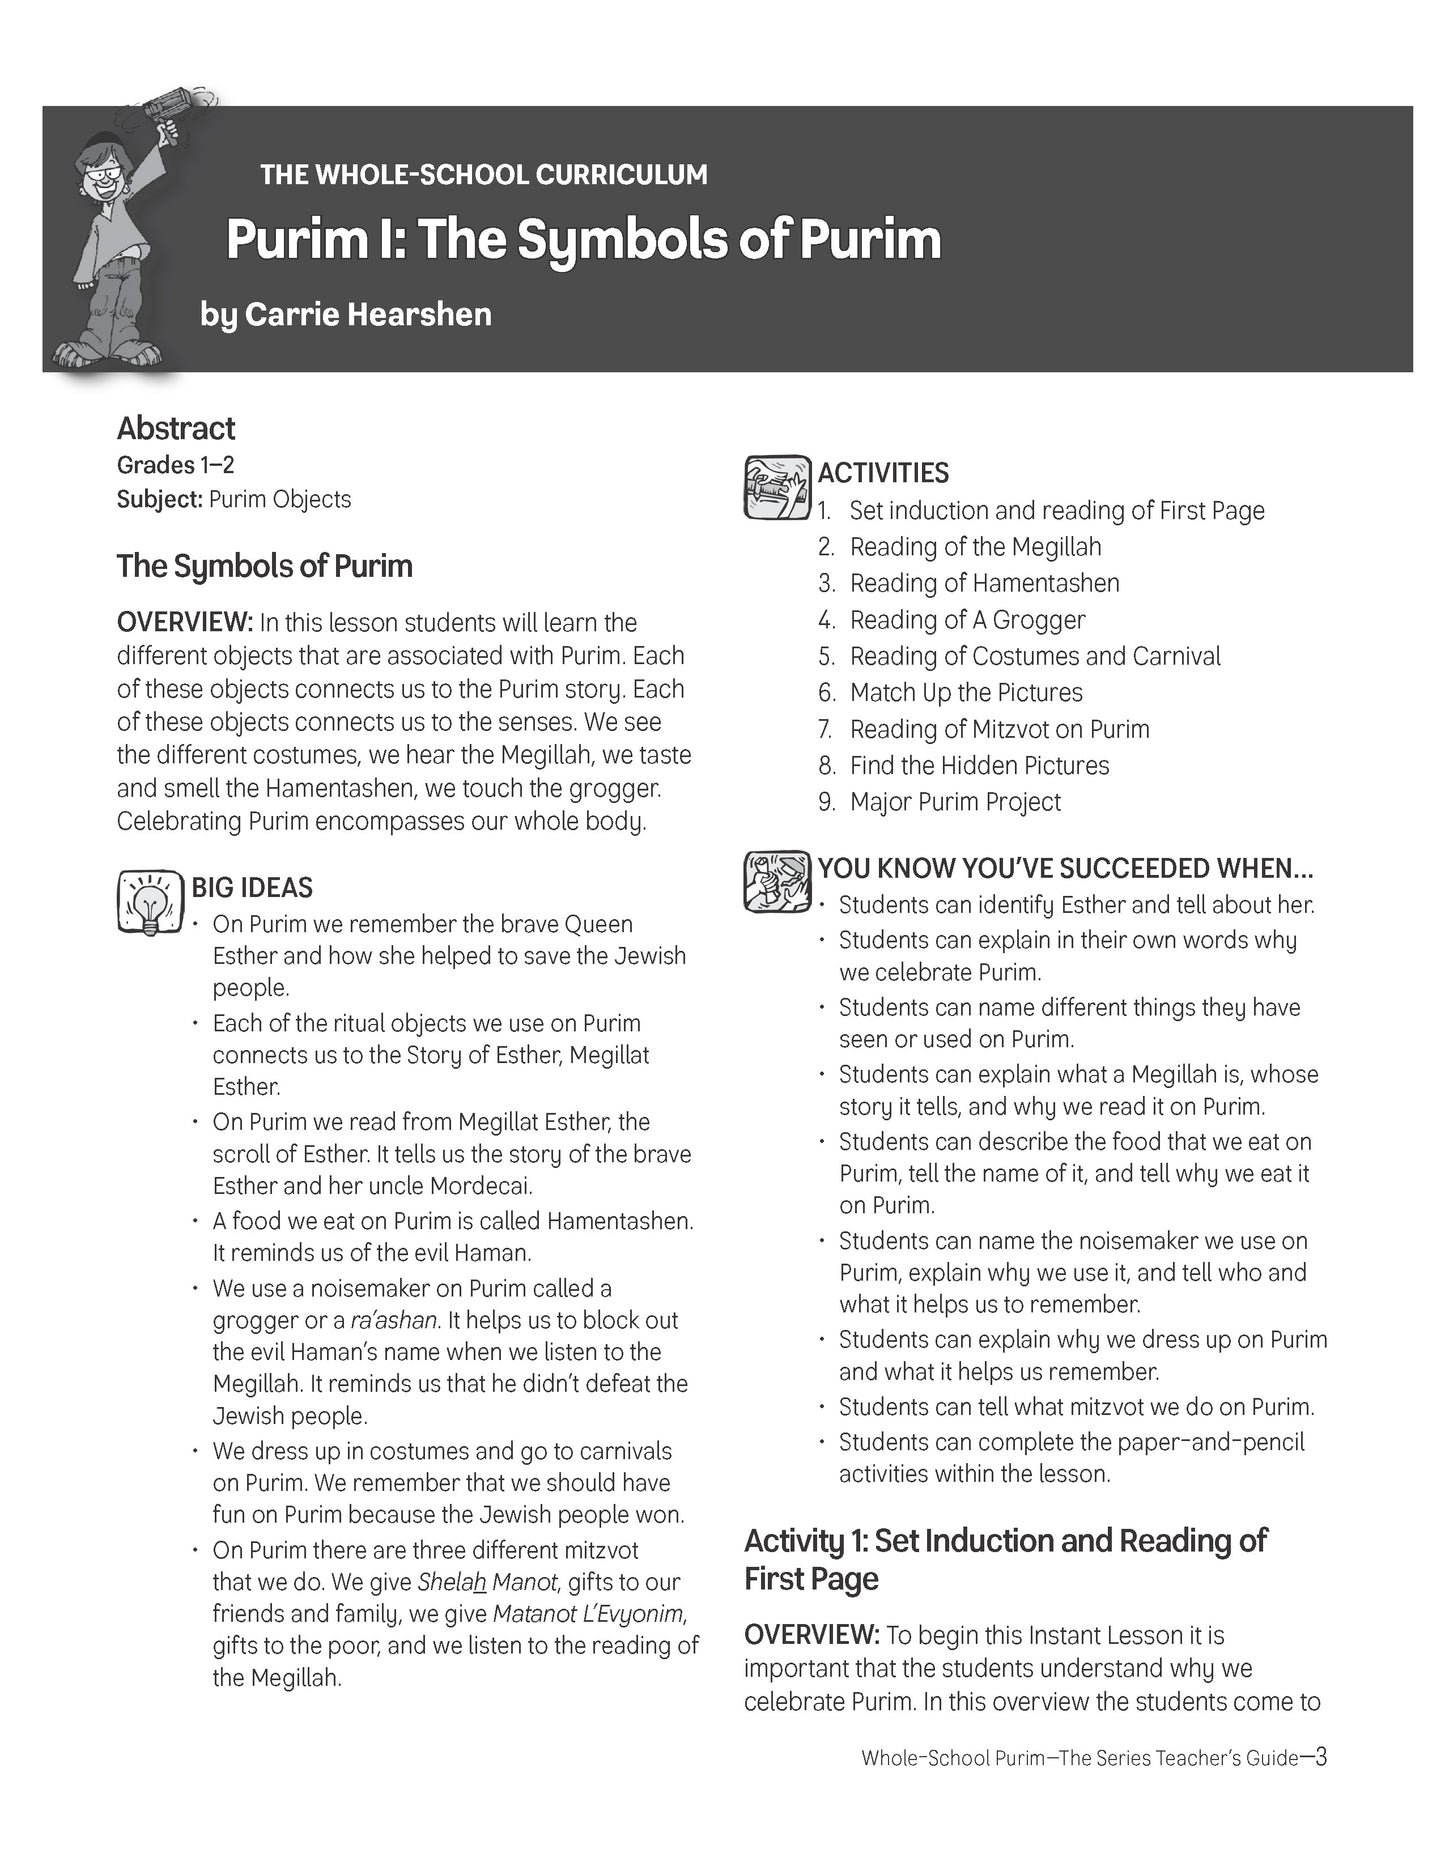 Whole School Purim Teacher's Guide